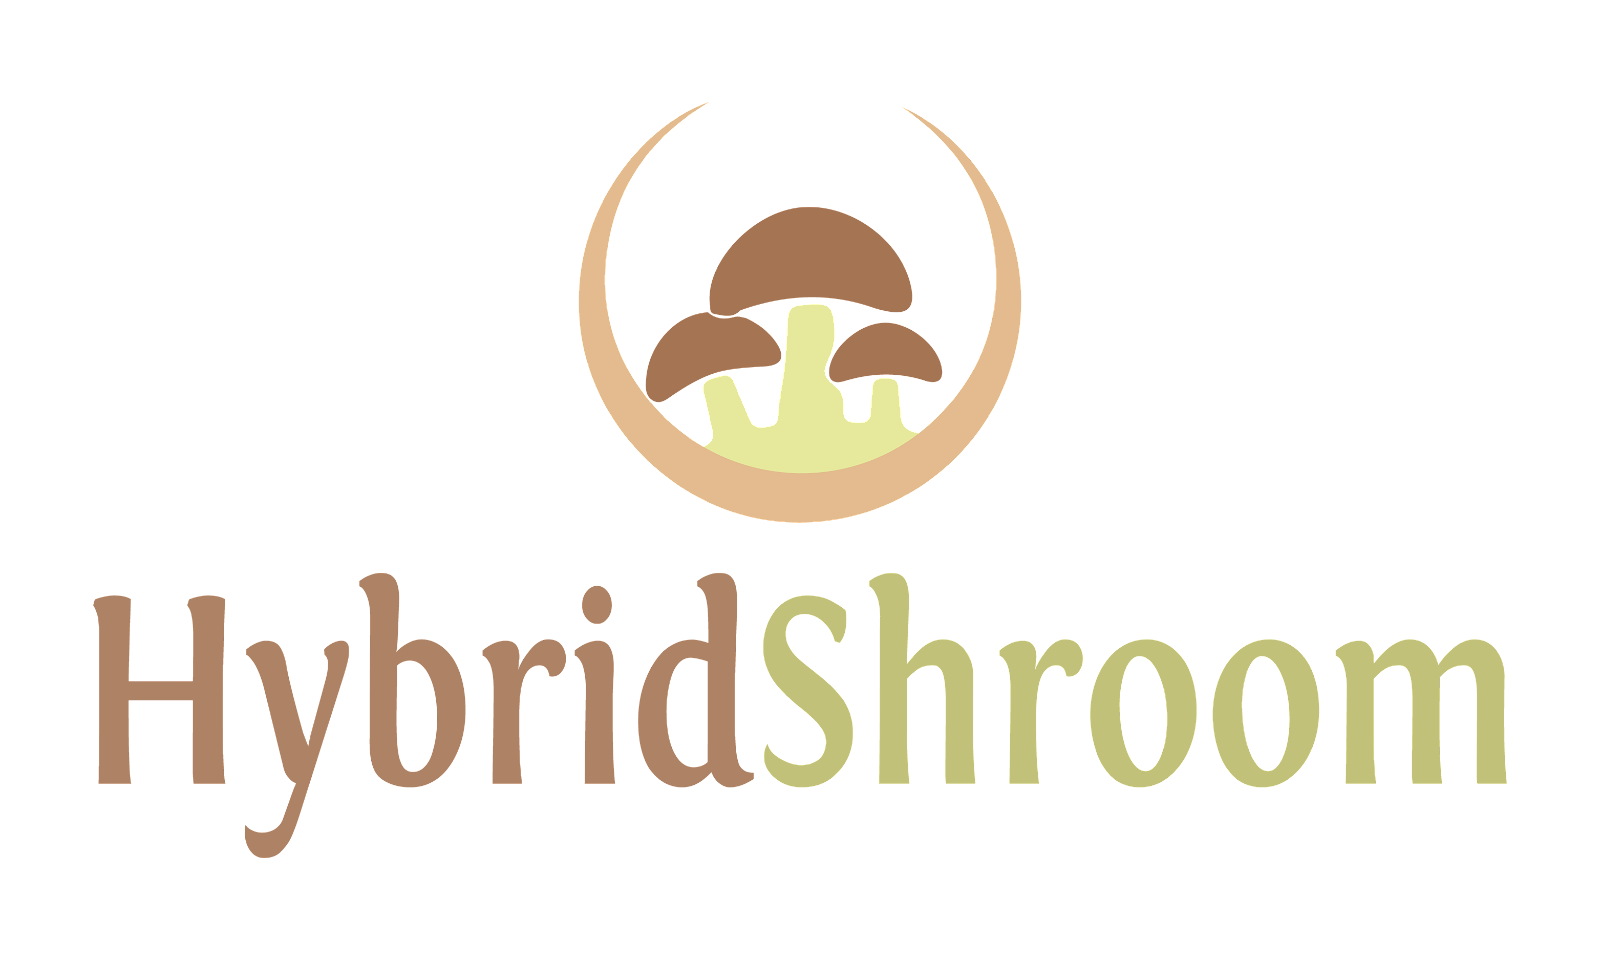 HybridShroom.com - Creative brandable domain for sale